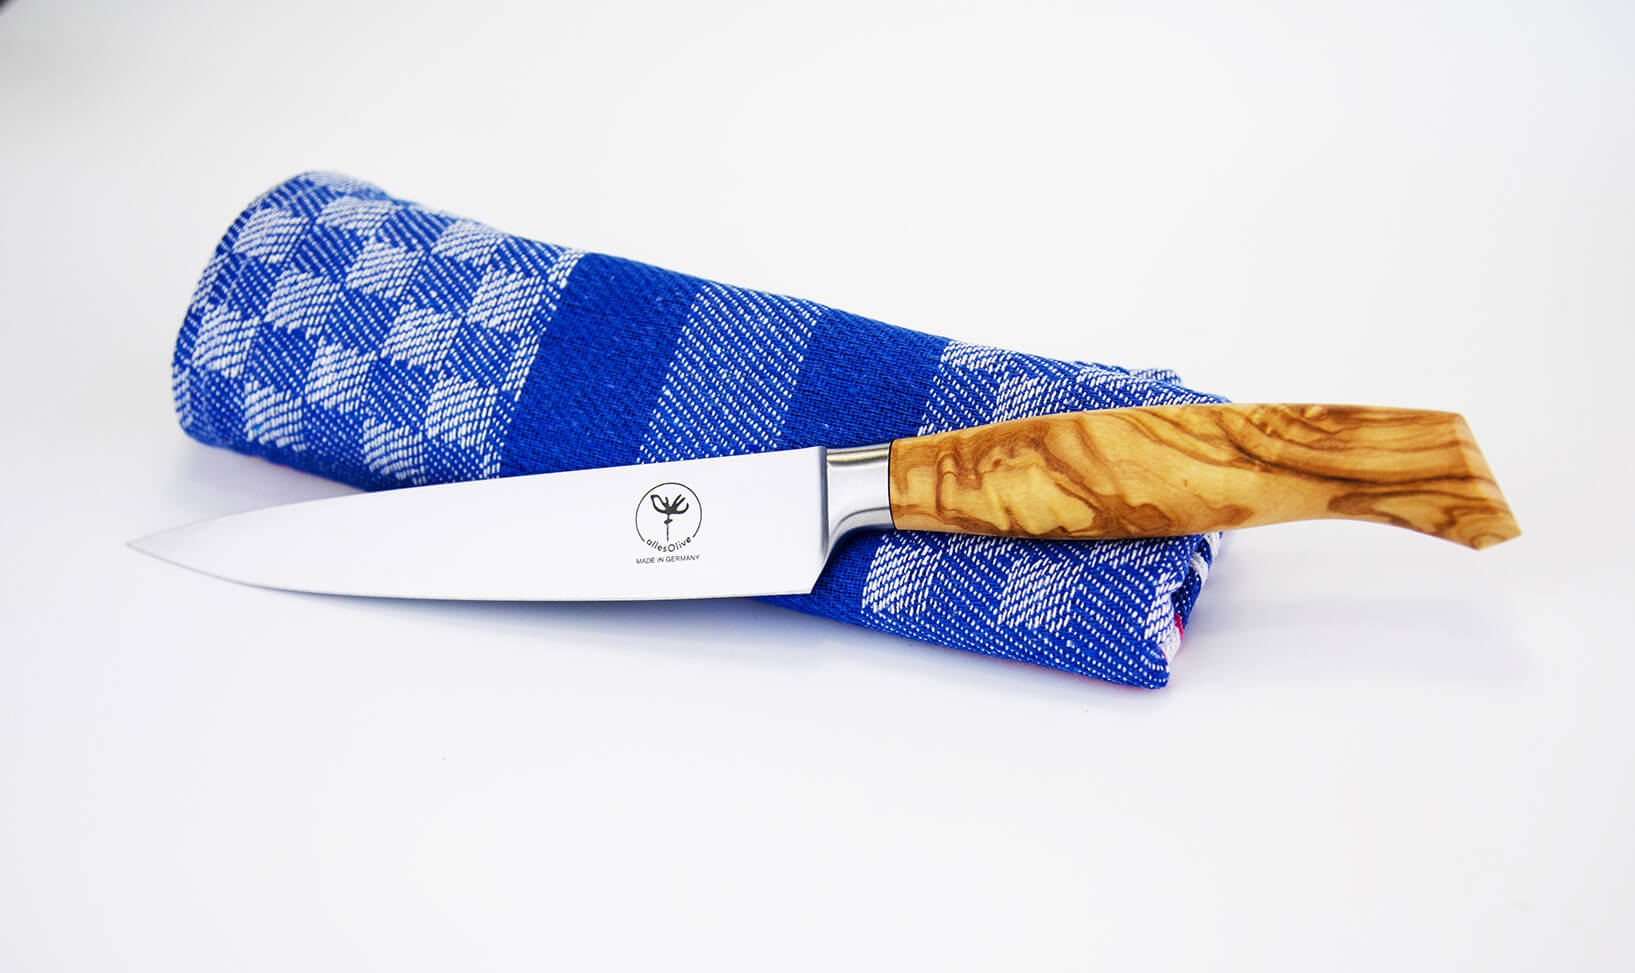 Cuchillo universal de 15cm con mango de madera de olivo.